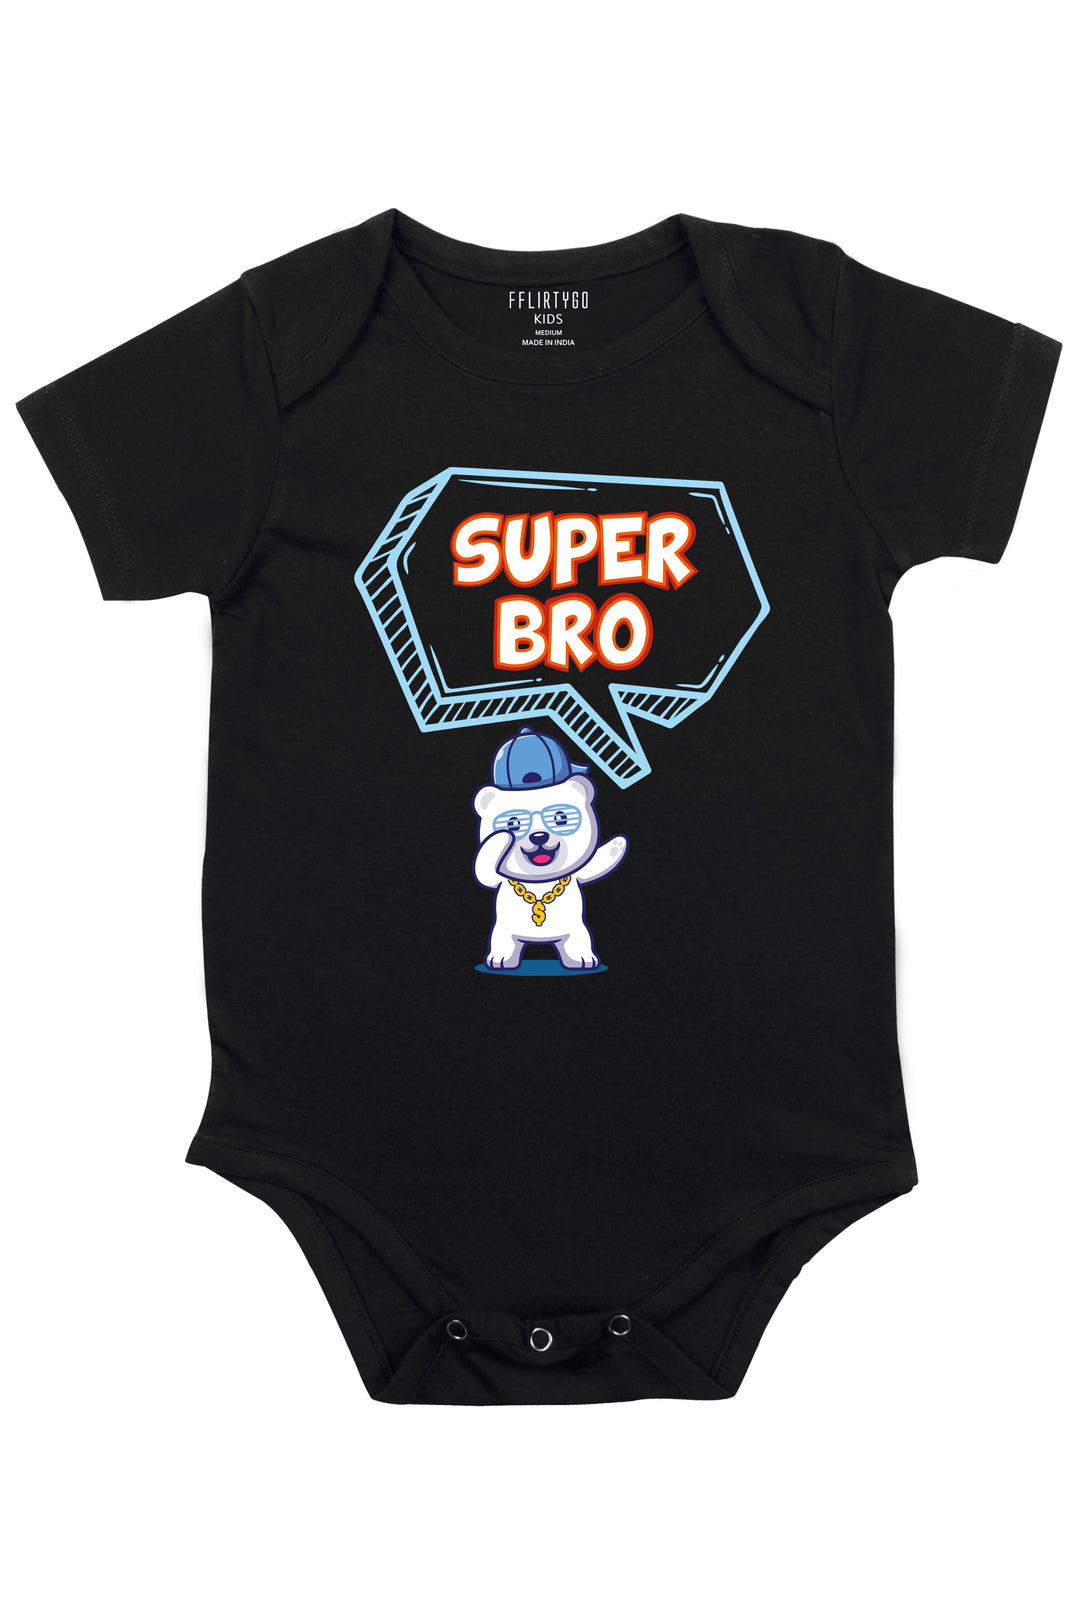 Super Bro Baby Romper | Onesies